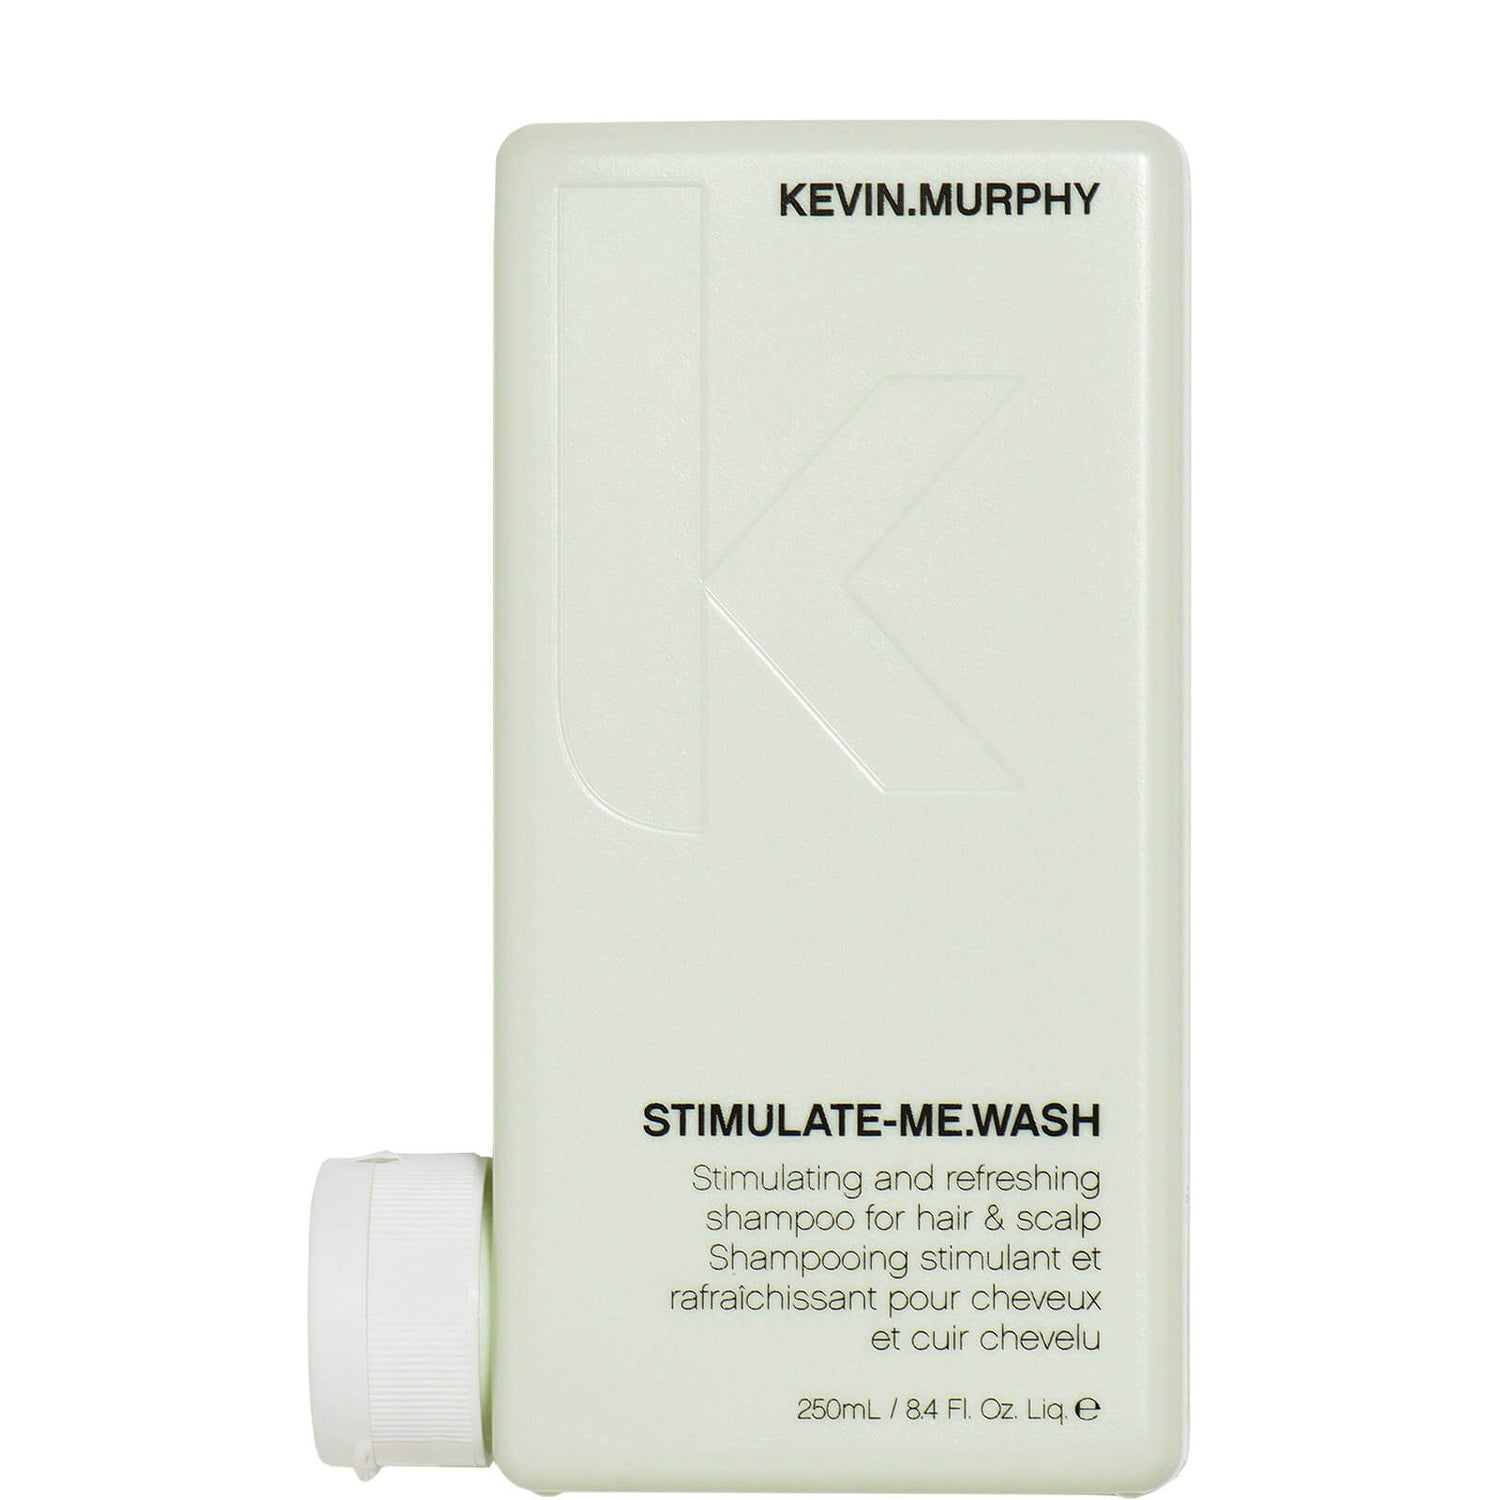 KEVIN.MURPHY Stimulate-Me.Wash